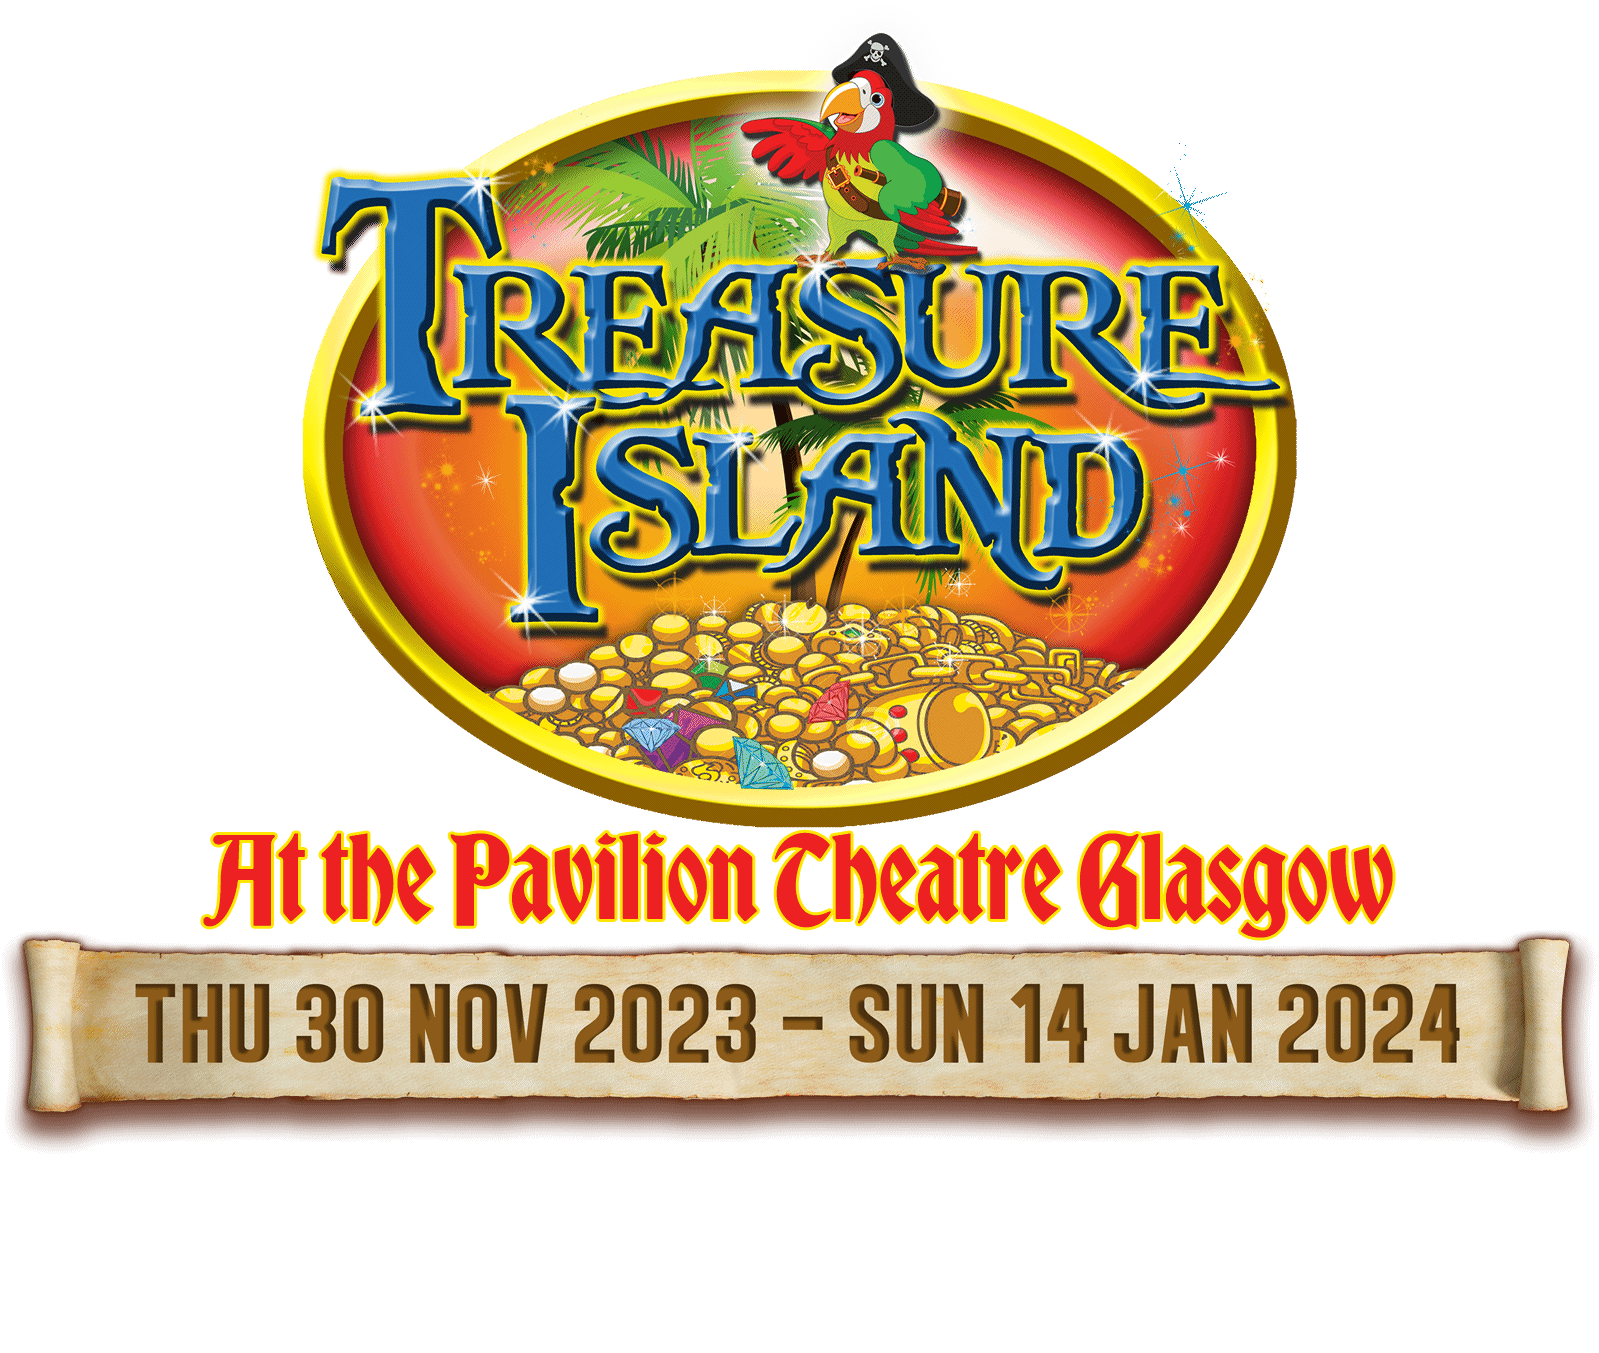 Treasure Island at the Pavilion Theatre, Glasgow - 3oth Nov 2023 to 14th Jan 2024s